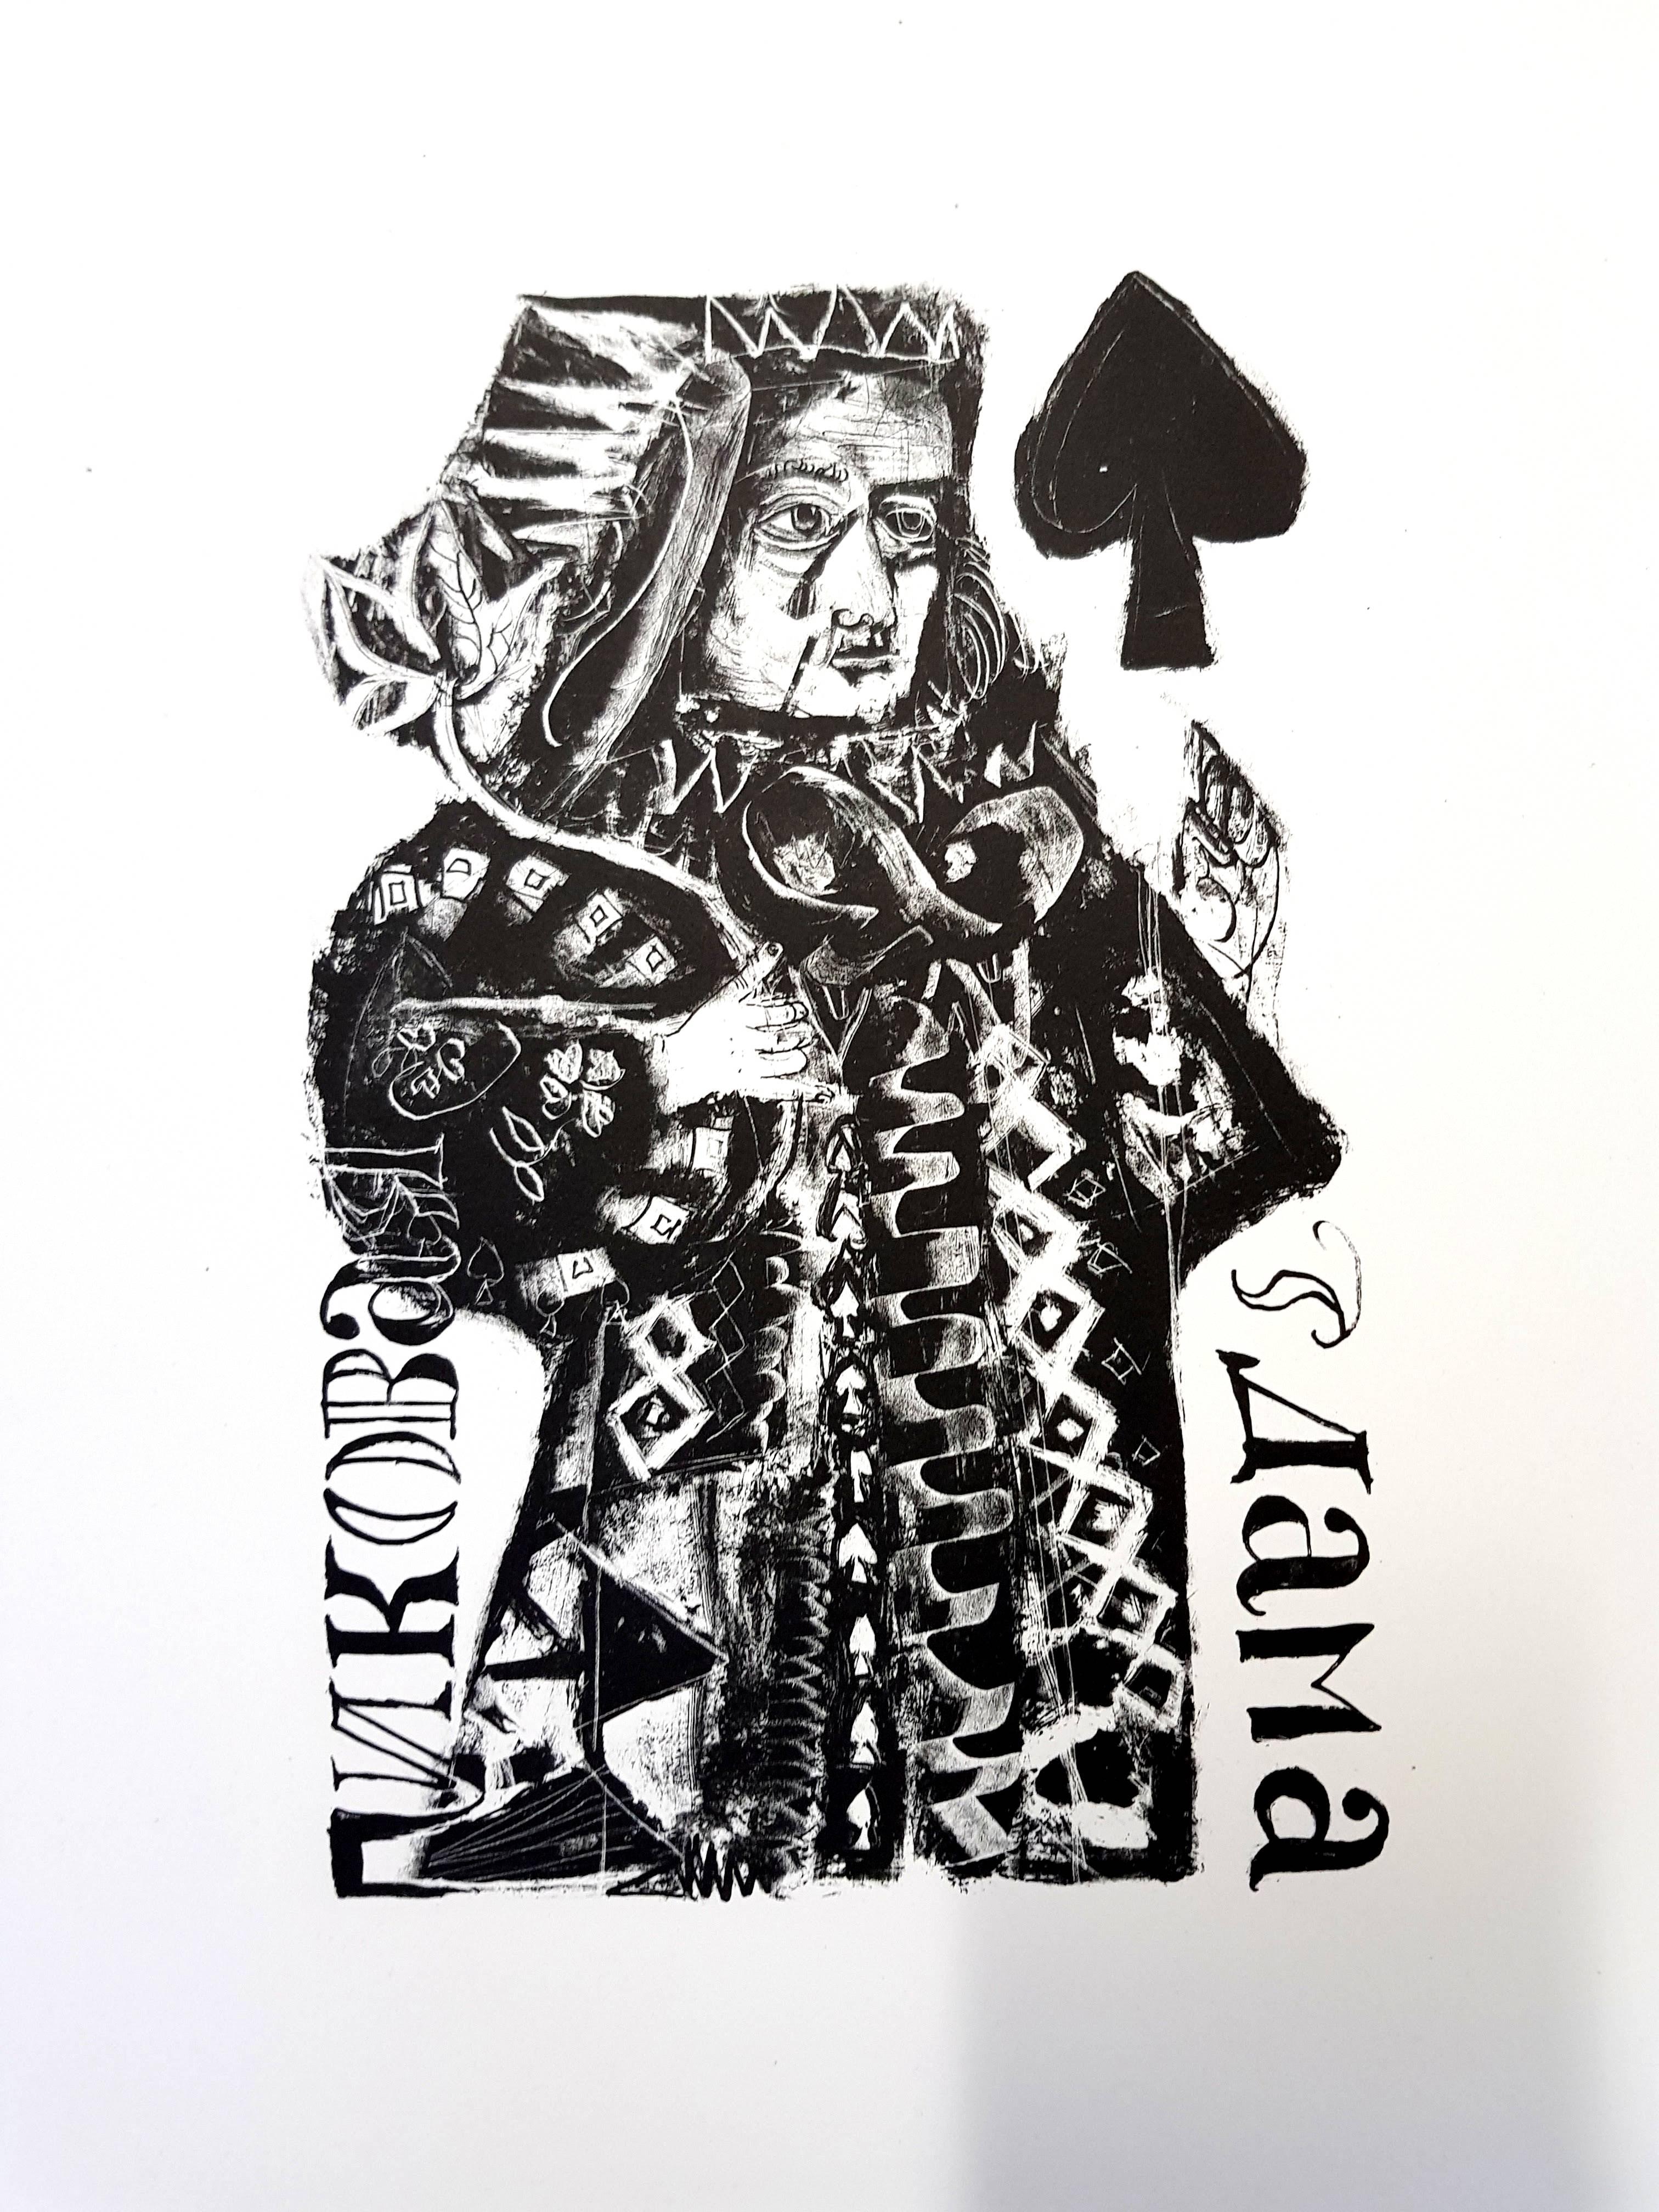 Antoni Clavé - Original Lithograph - For Pushkin's Queen of Spades